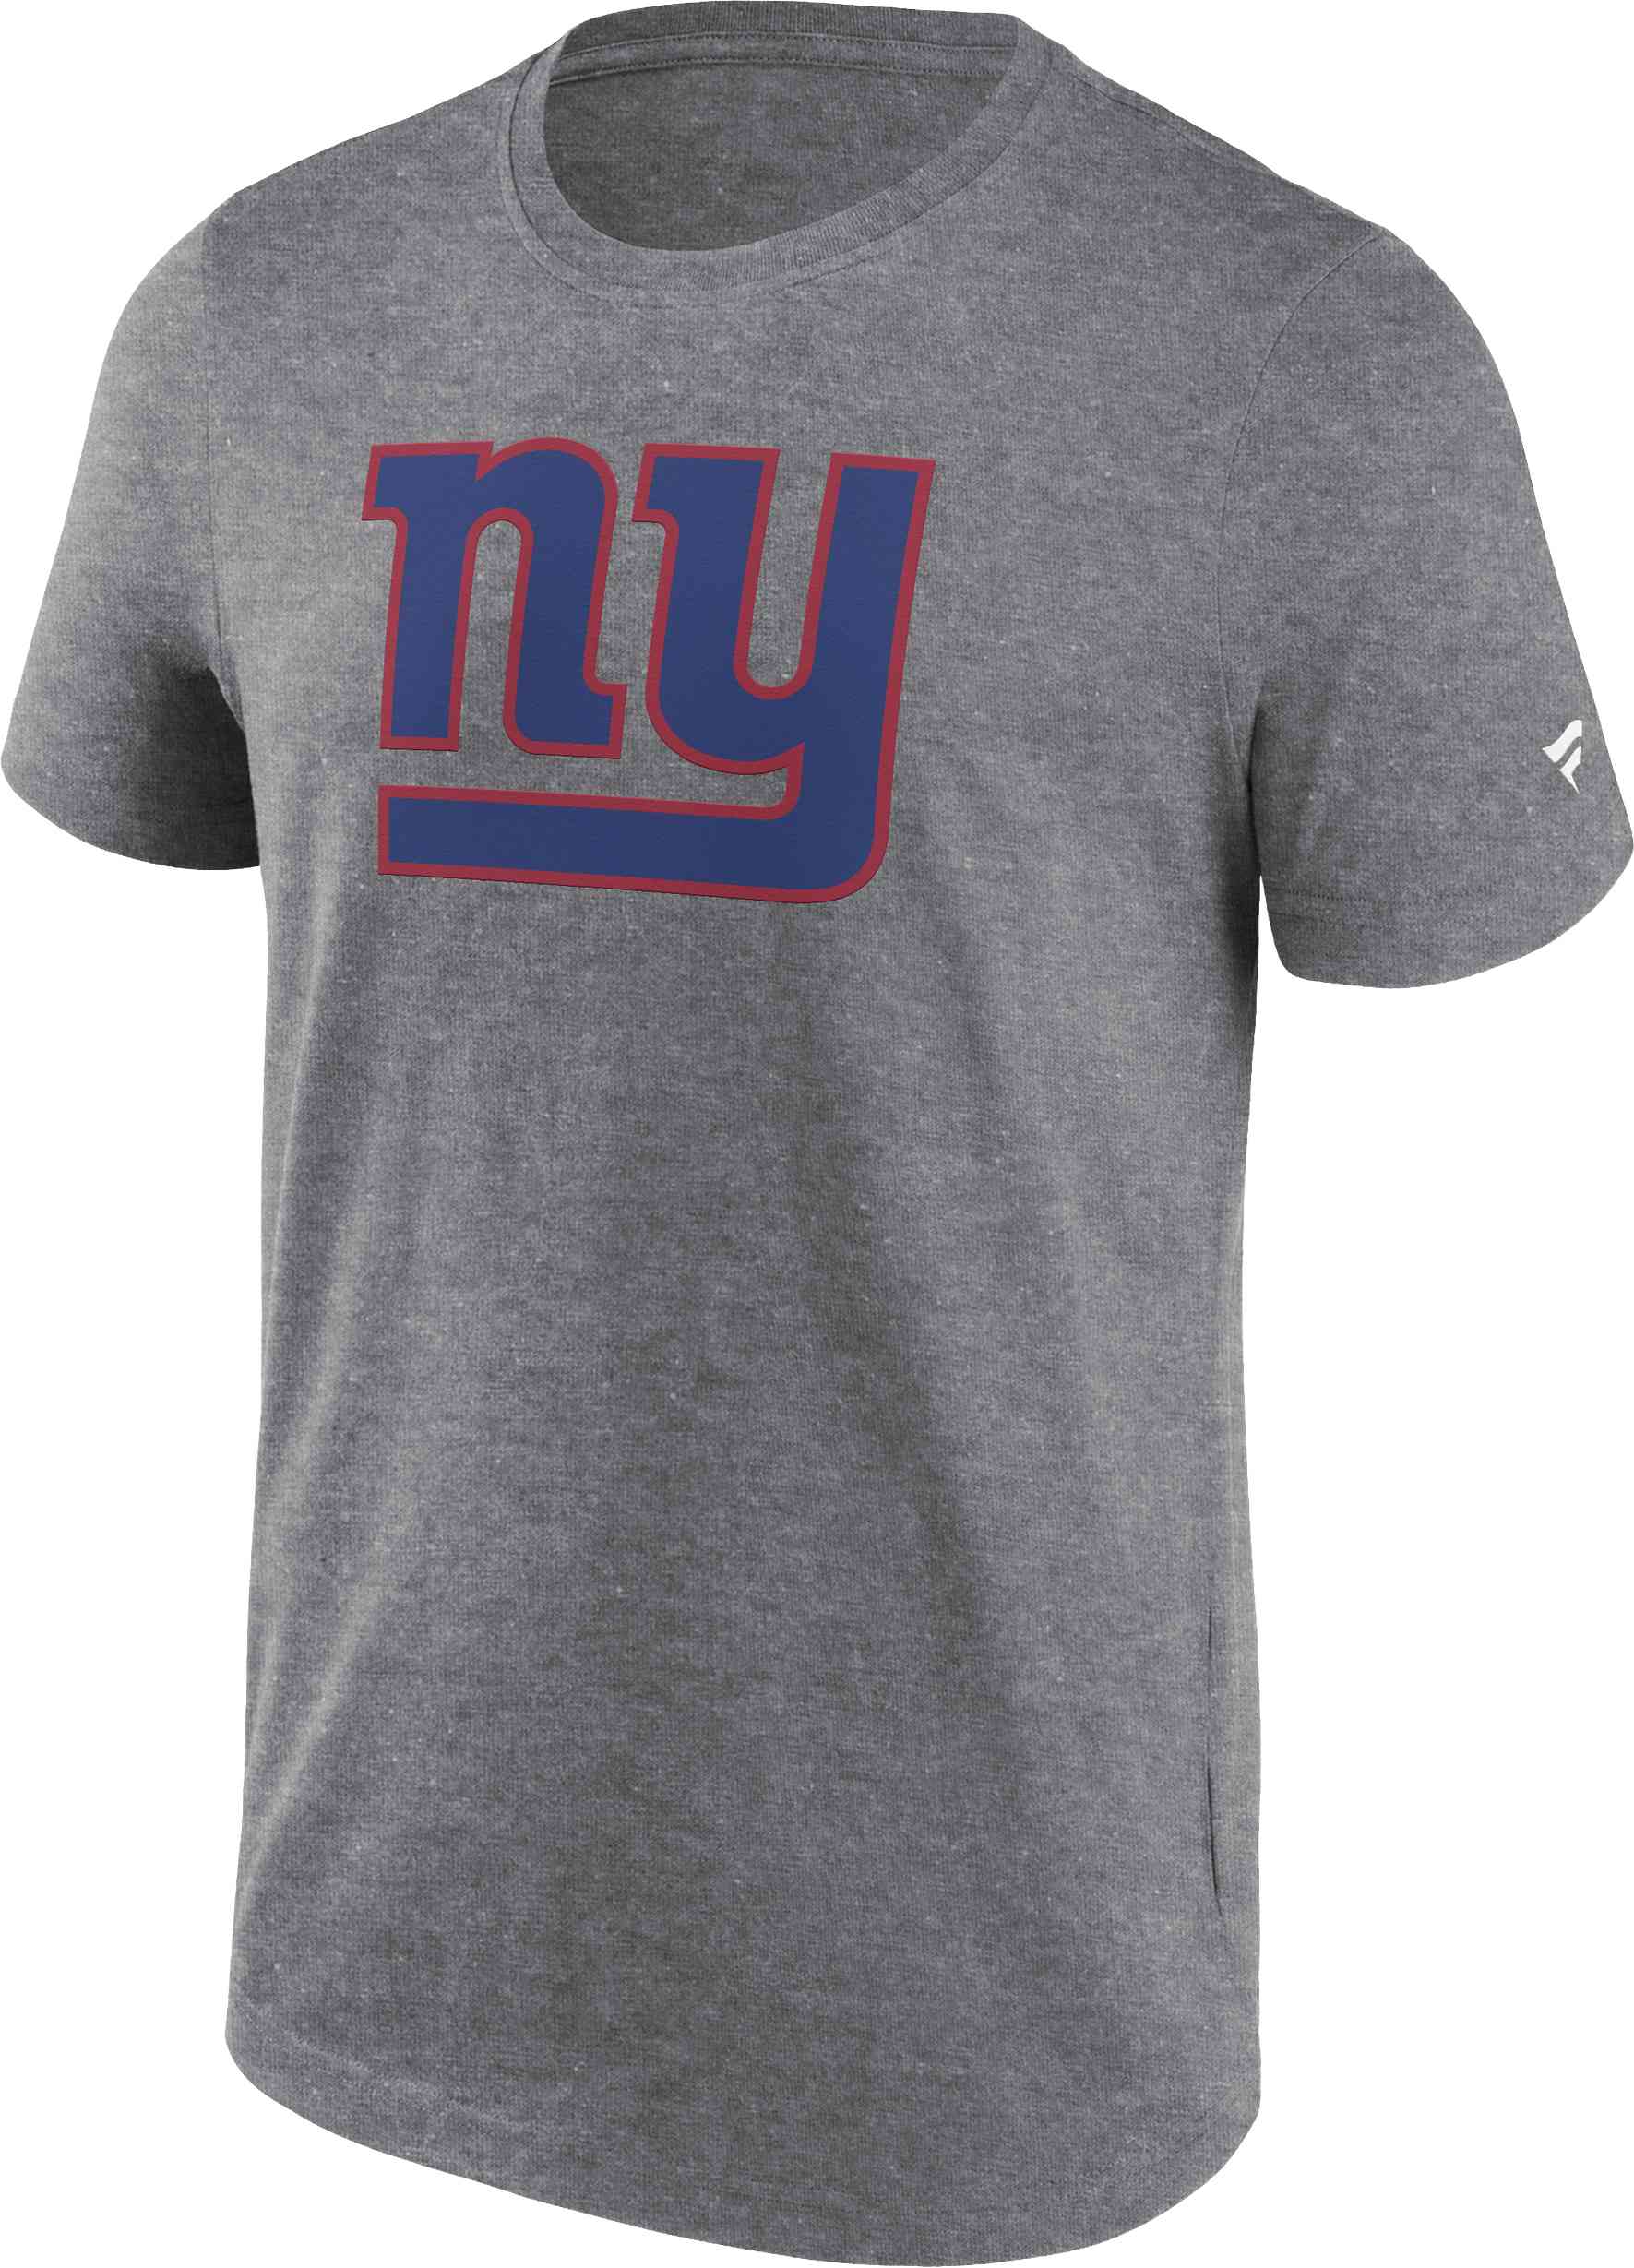 Fanatics - NFL New York Giants Primary Logo Graphic T-Shirt